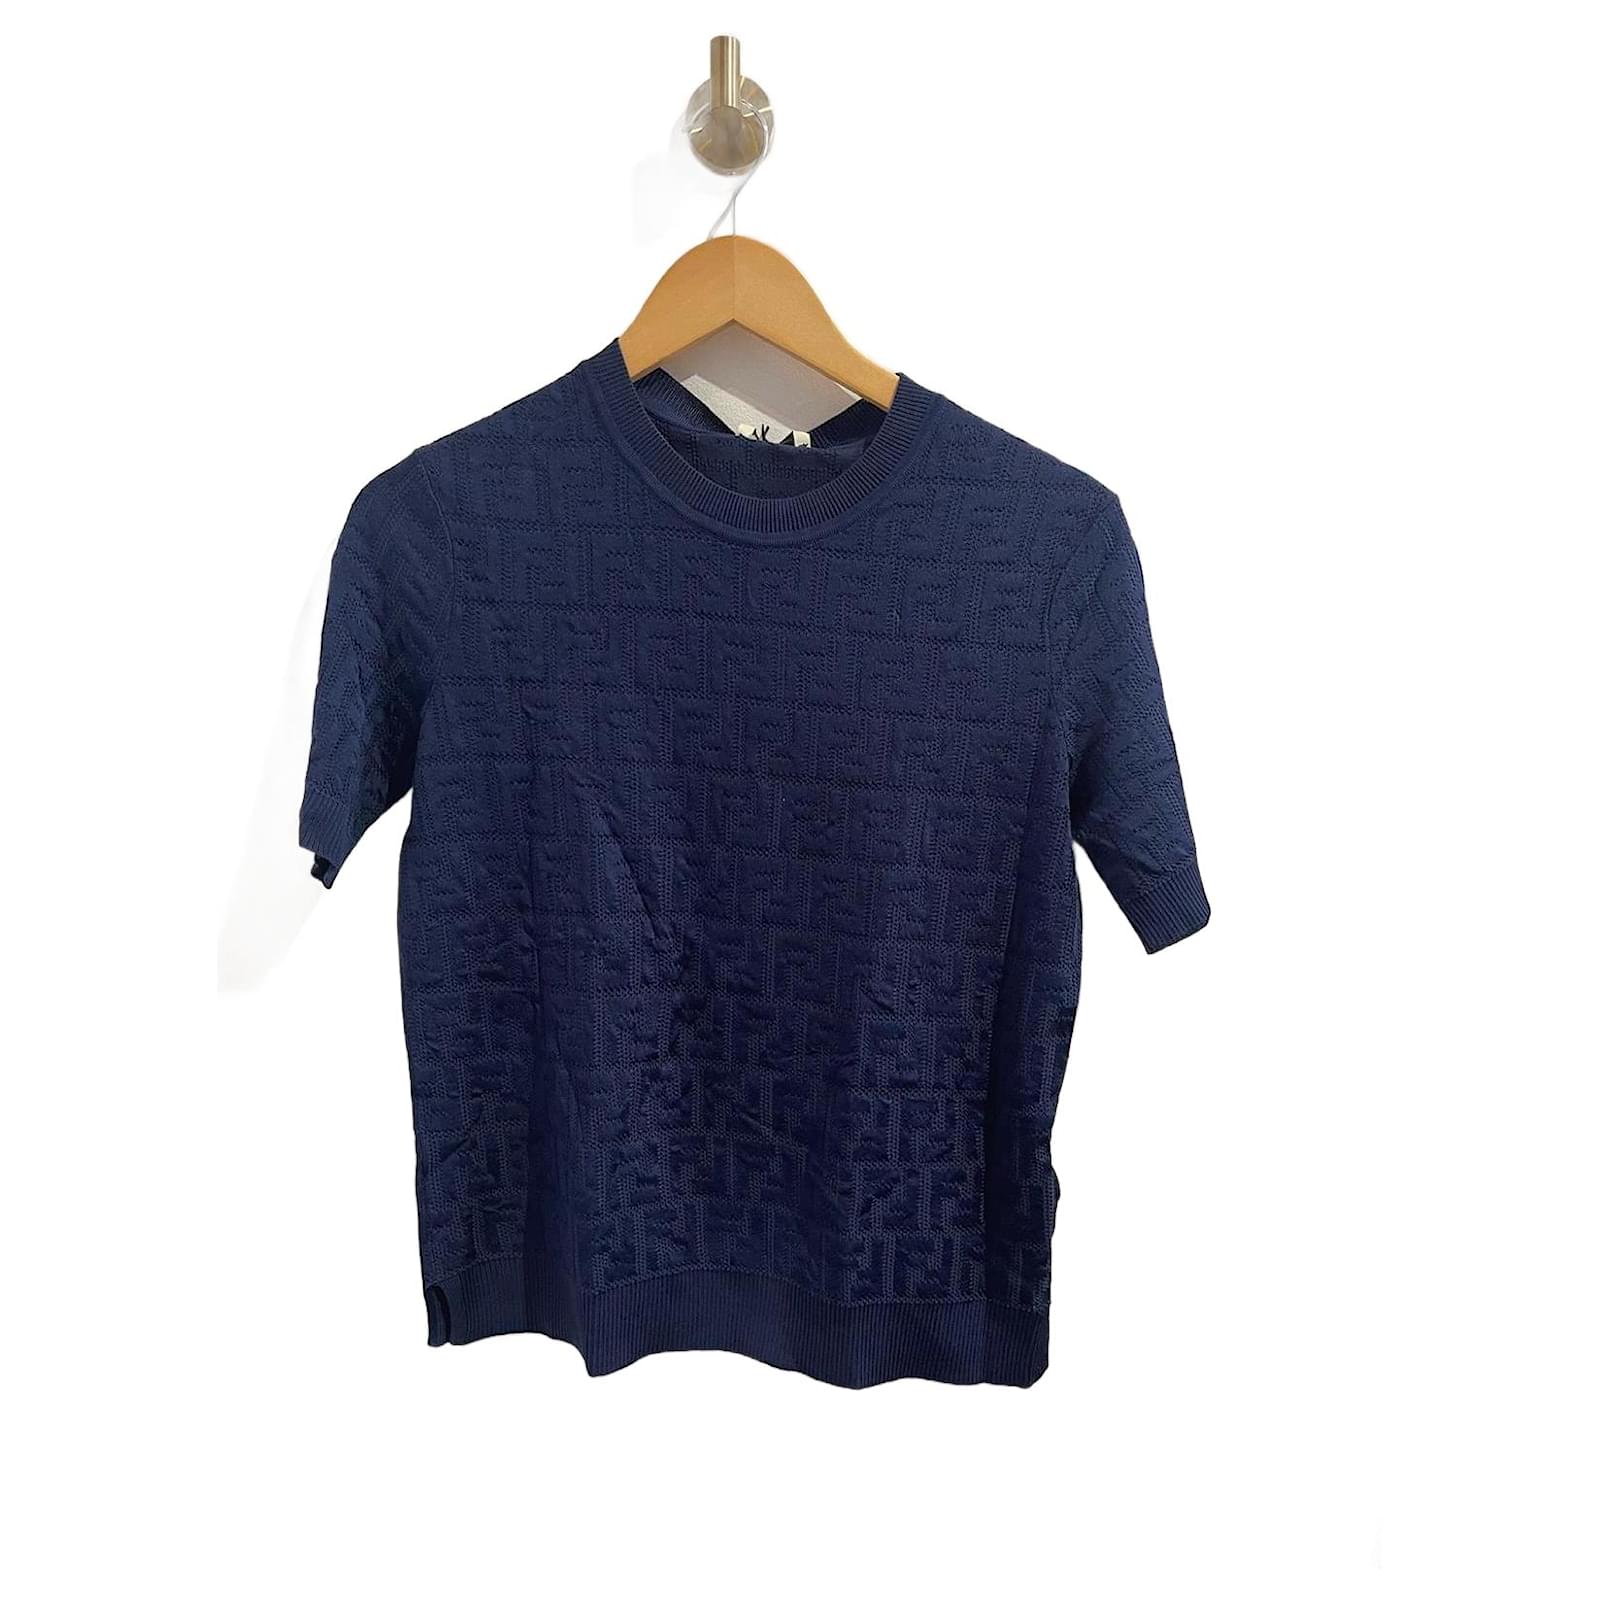 Sweatshirt Louis Vuitton Blue size L International in Cotton